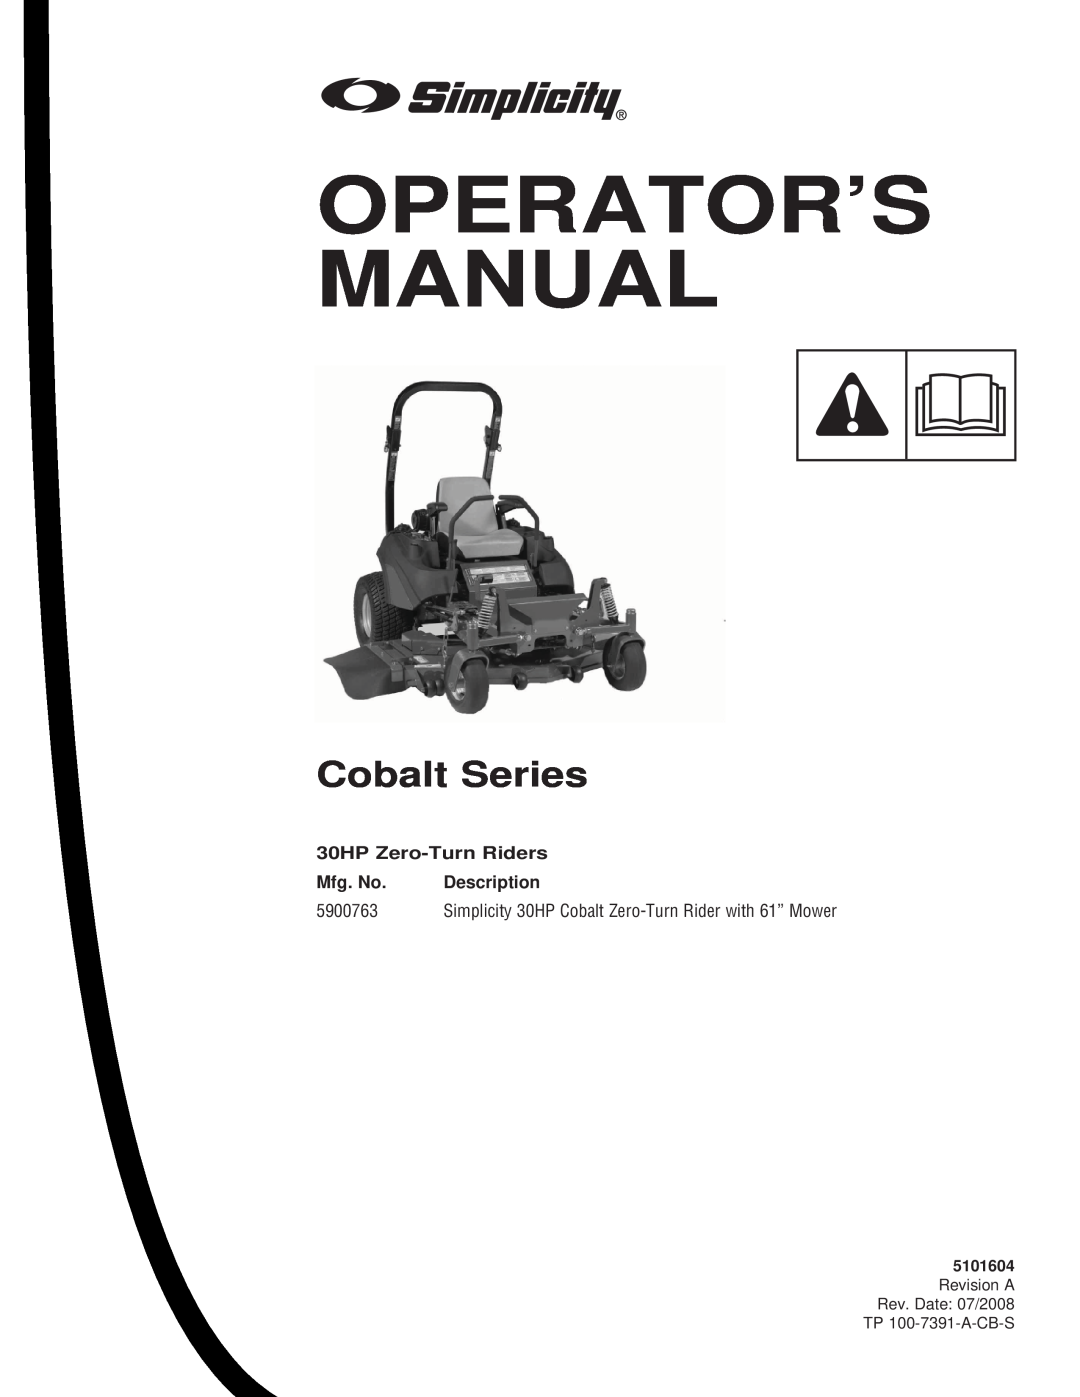 Simplicity 5101604, 543777-0113-E1 manual Operator’S Manual, Cobalt Series, 30HP Zero-Turn Riders, Mfg. No, Description 